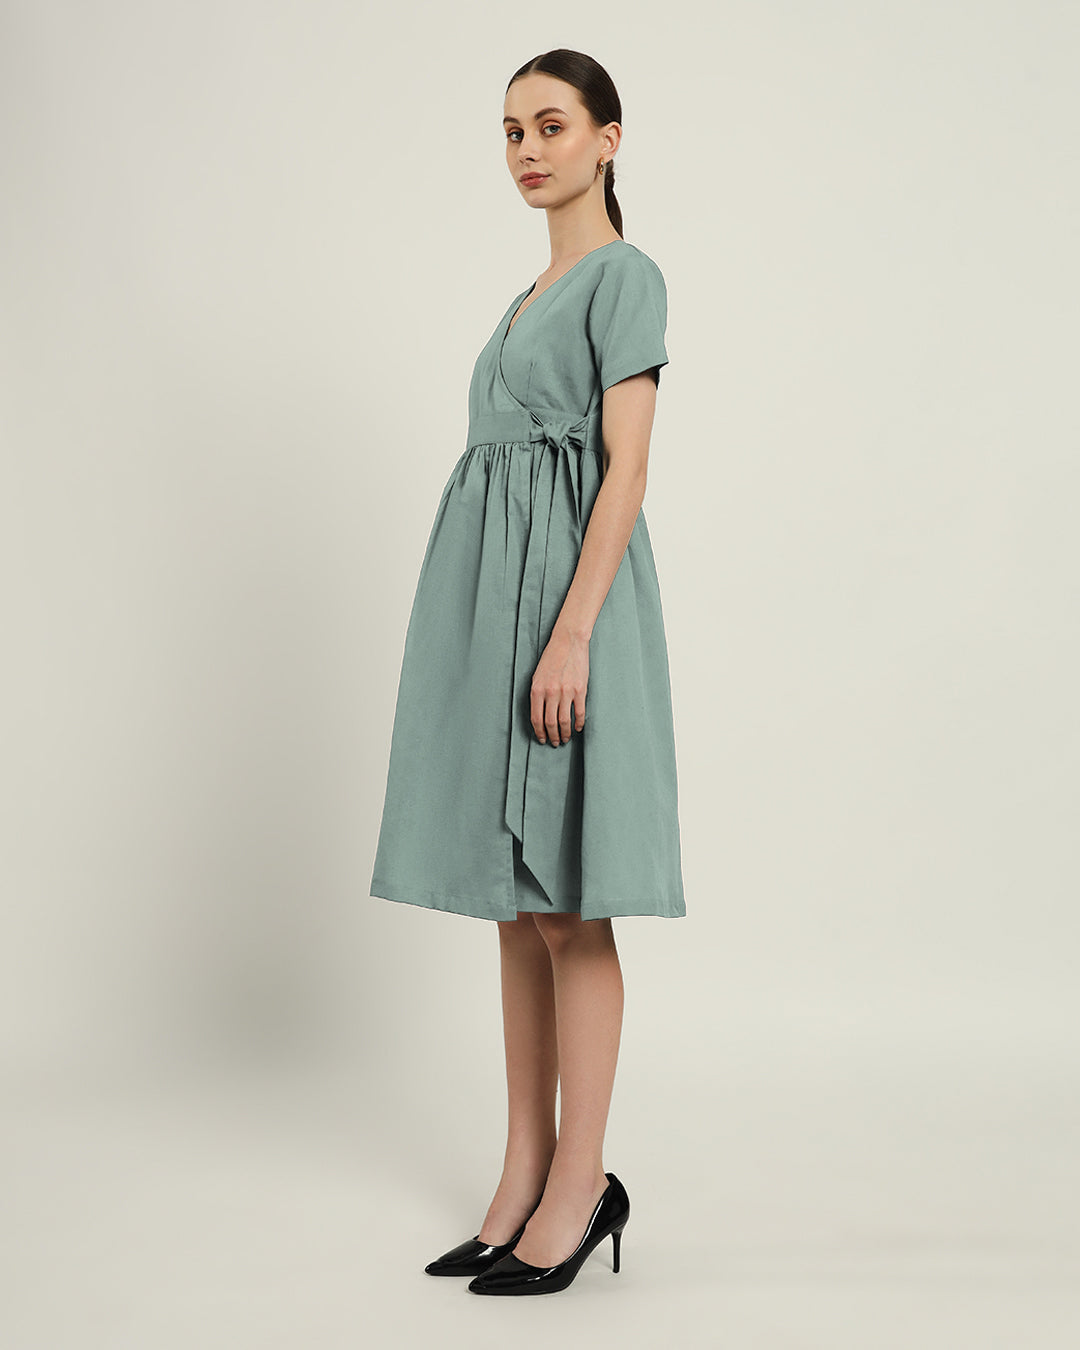 The Miyoshi Daisy Carolina Linen Dress